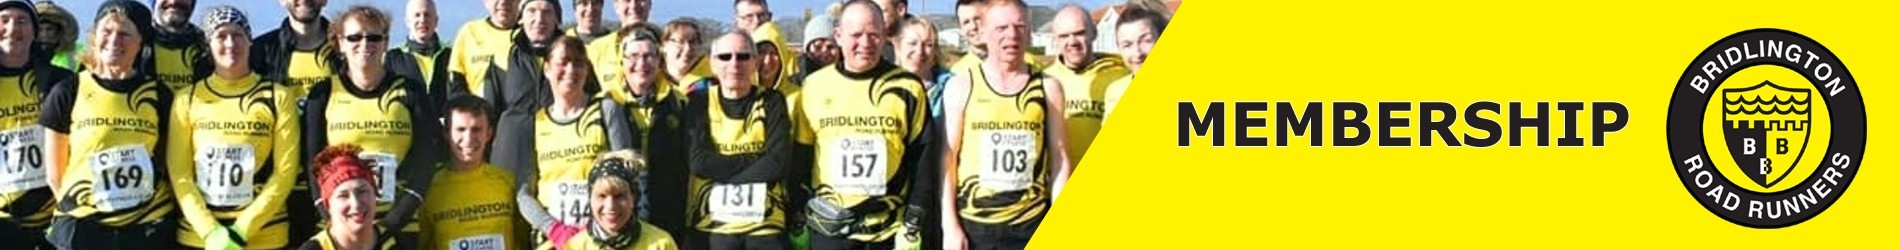 Bridlington Road Runners Season 2021-22 Membership